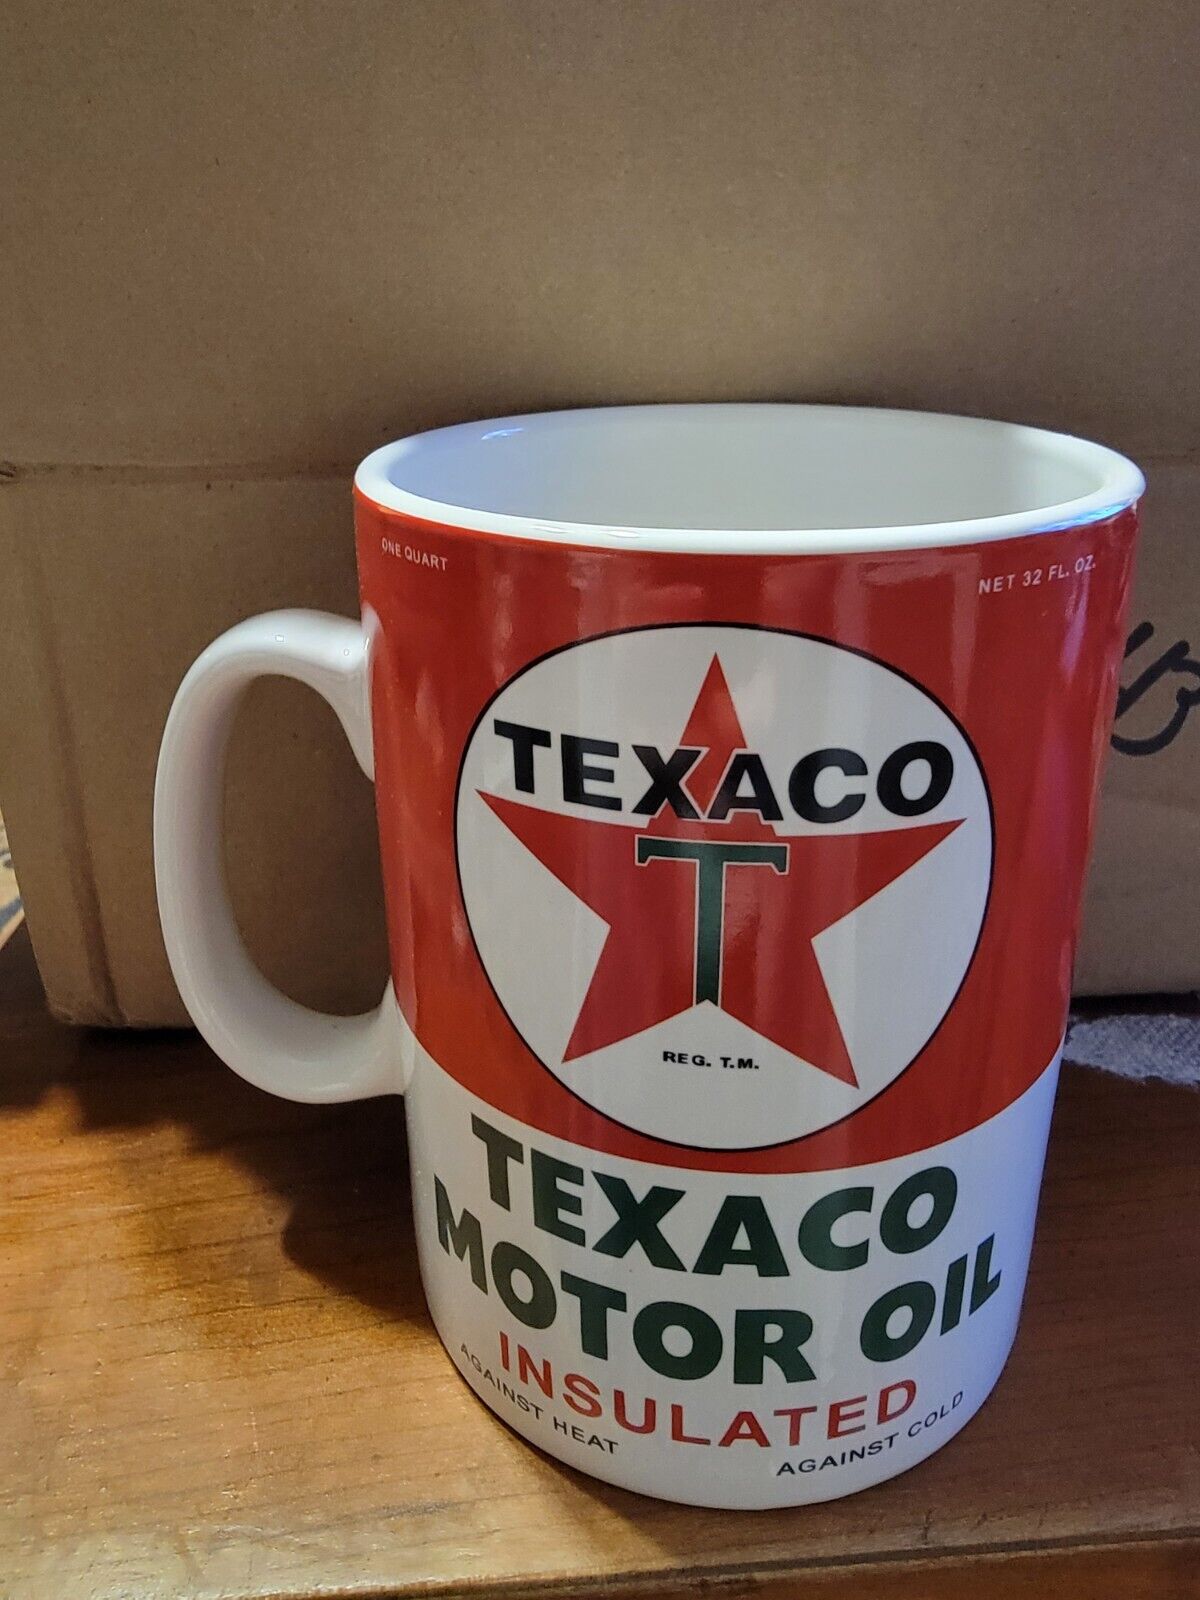 Texaco Motor Oil Quart Can Replica HUGE Oversize Ceramic Soup Coffee Tea Mug Cup